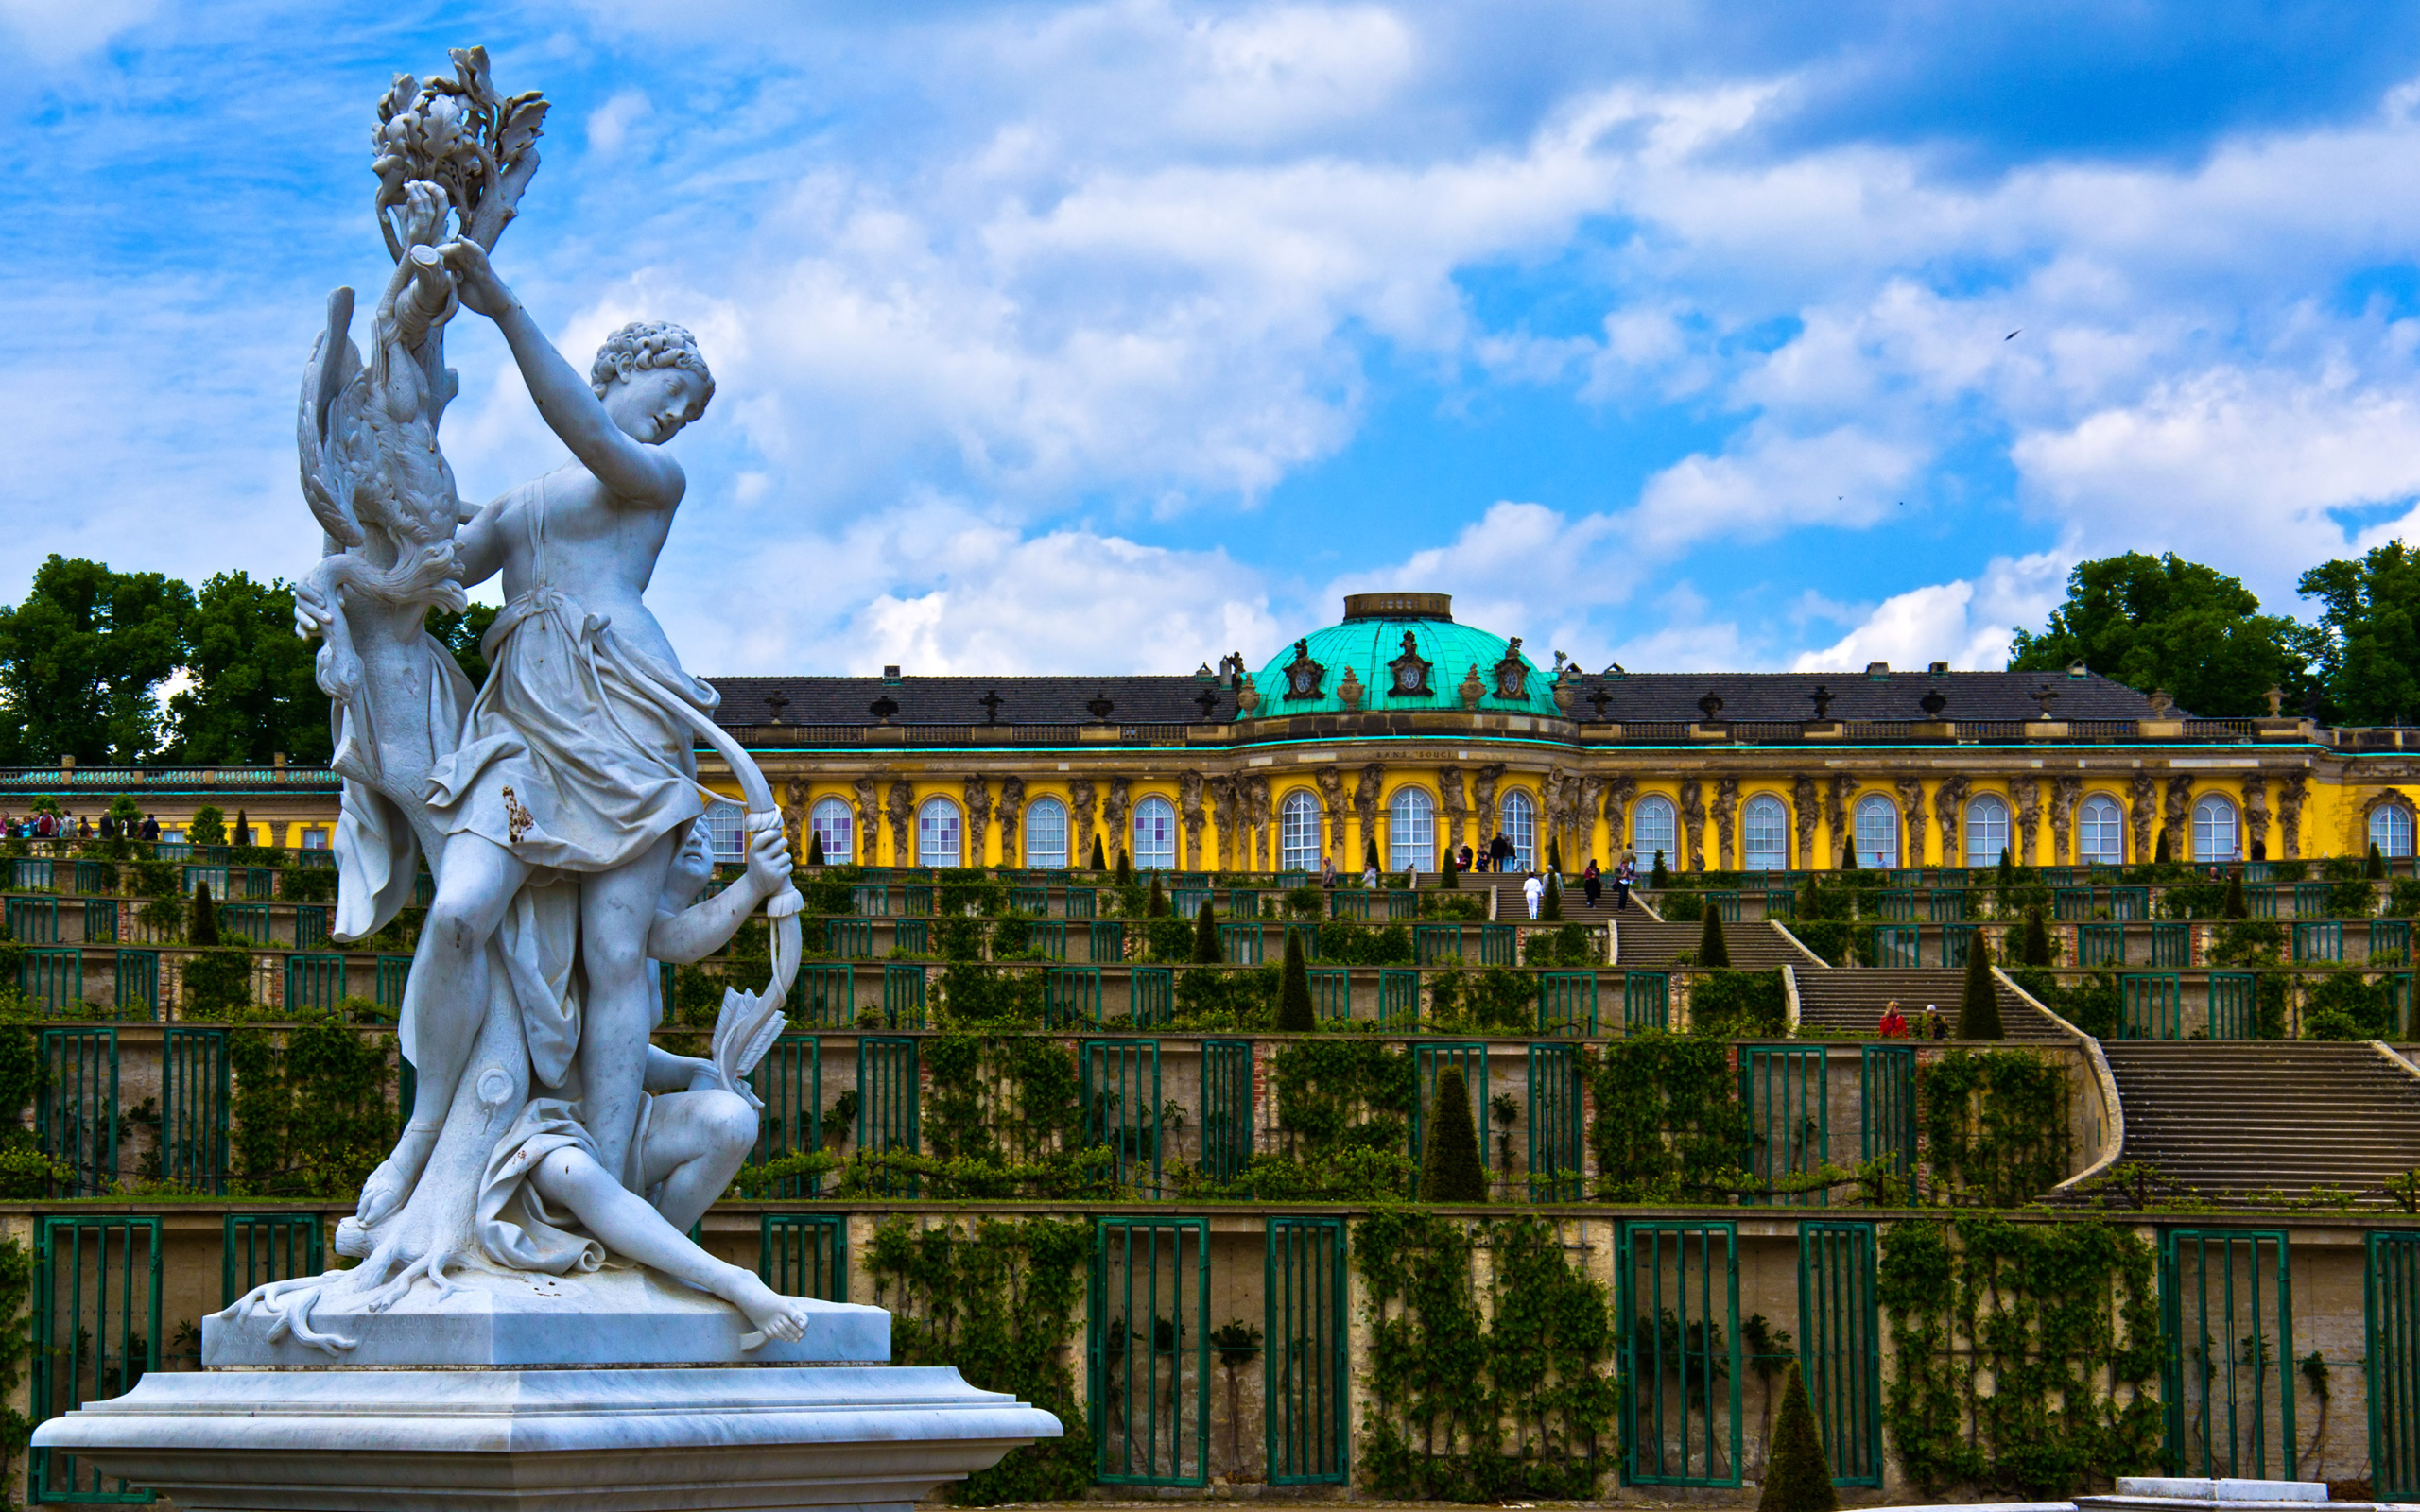 Скульптура у дворца Сан-Суси, Потсдам. Германия 